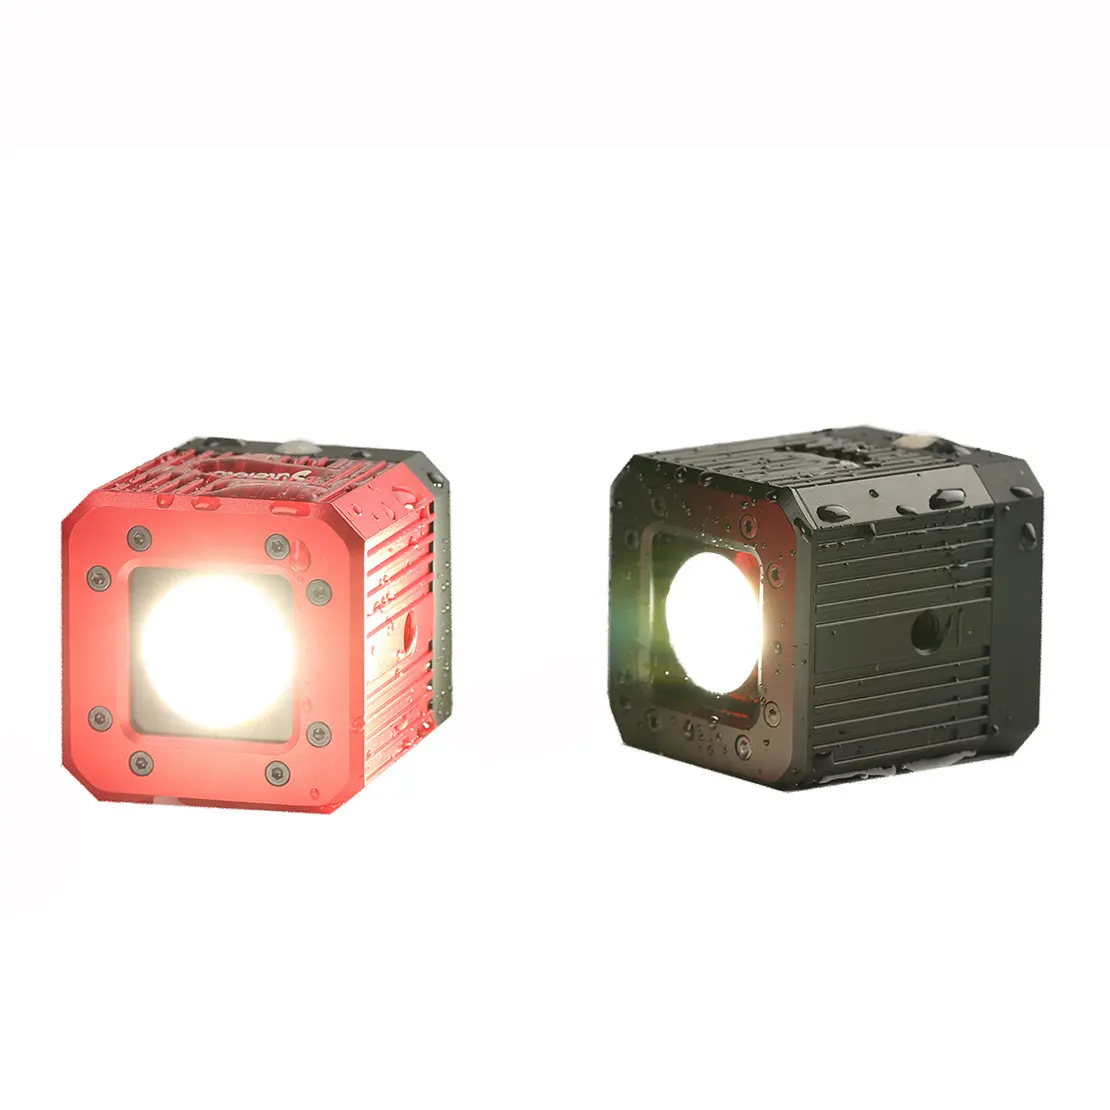 MINI luz LED COB para estudio fotográfico, lámpara de vídeo recargable, portátil